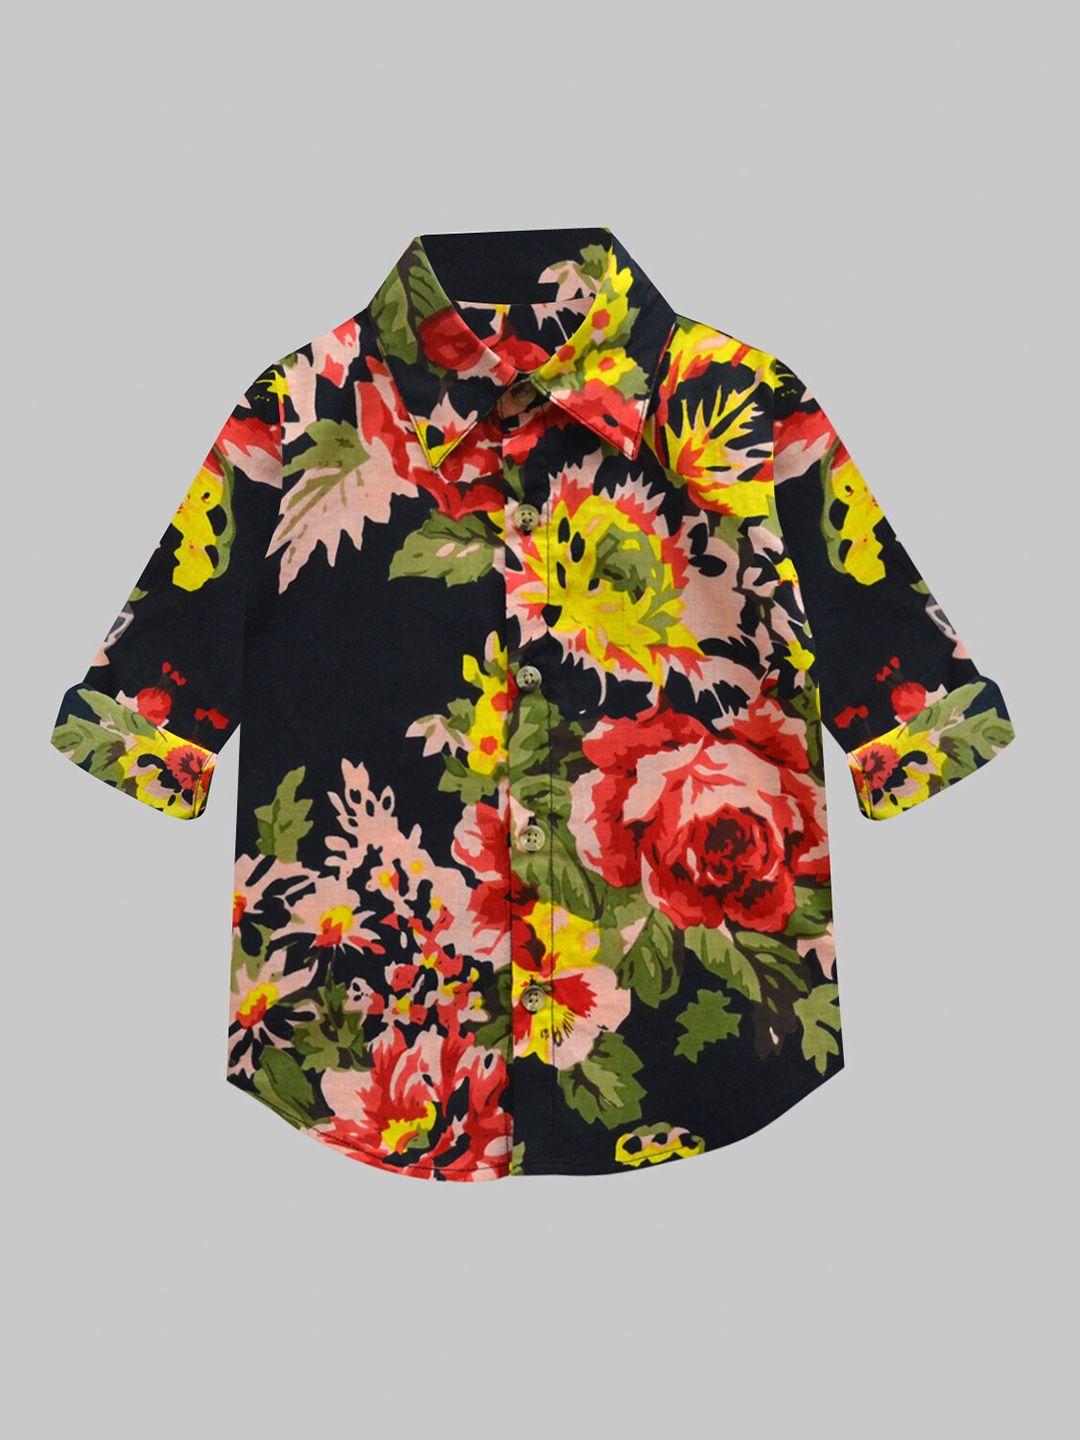 a t u n boys black classic floral printed pure cotton casual shirt